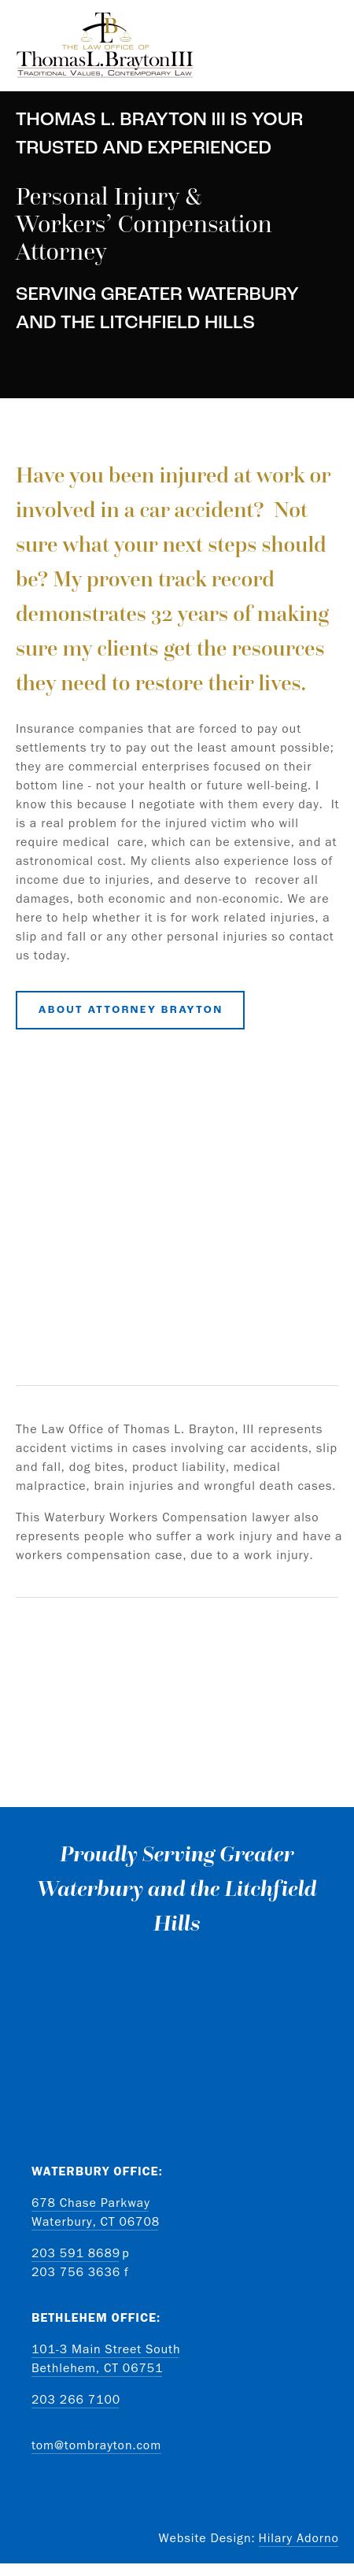 Brayton Thomas L. III - Waterbury CT Lawyers